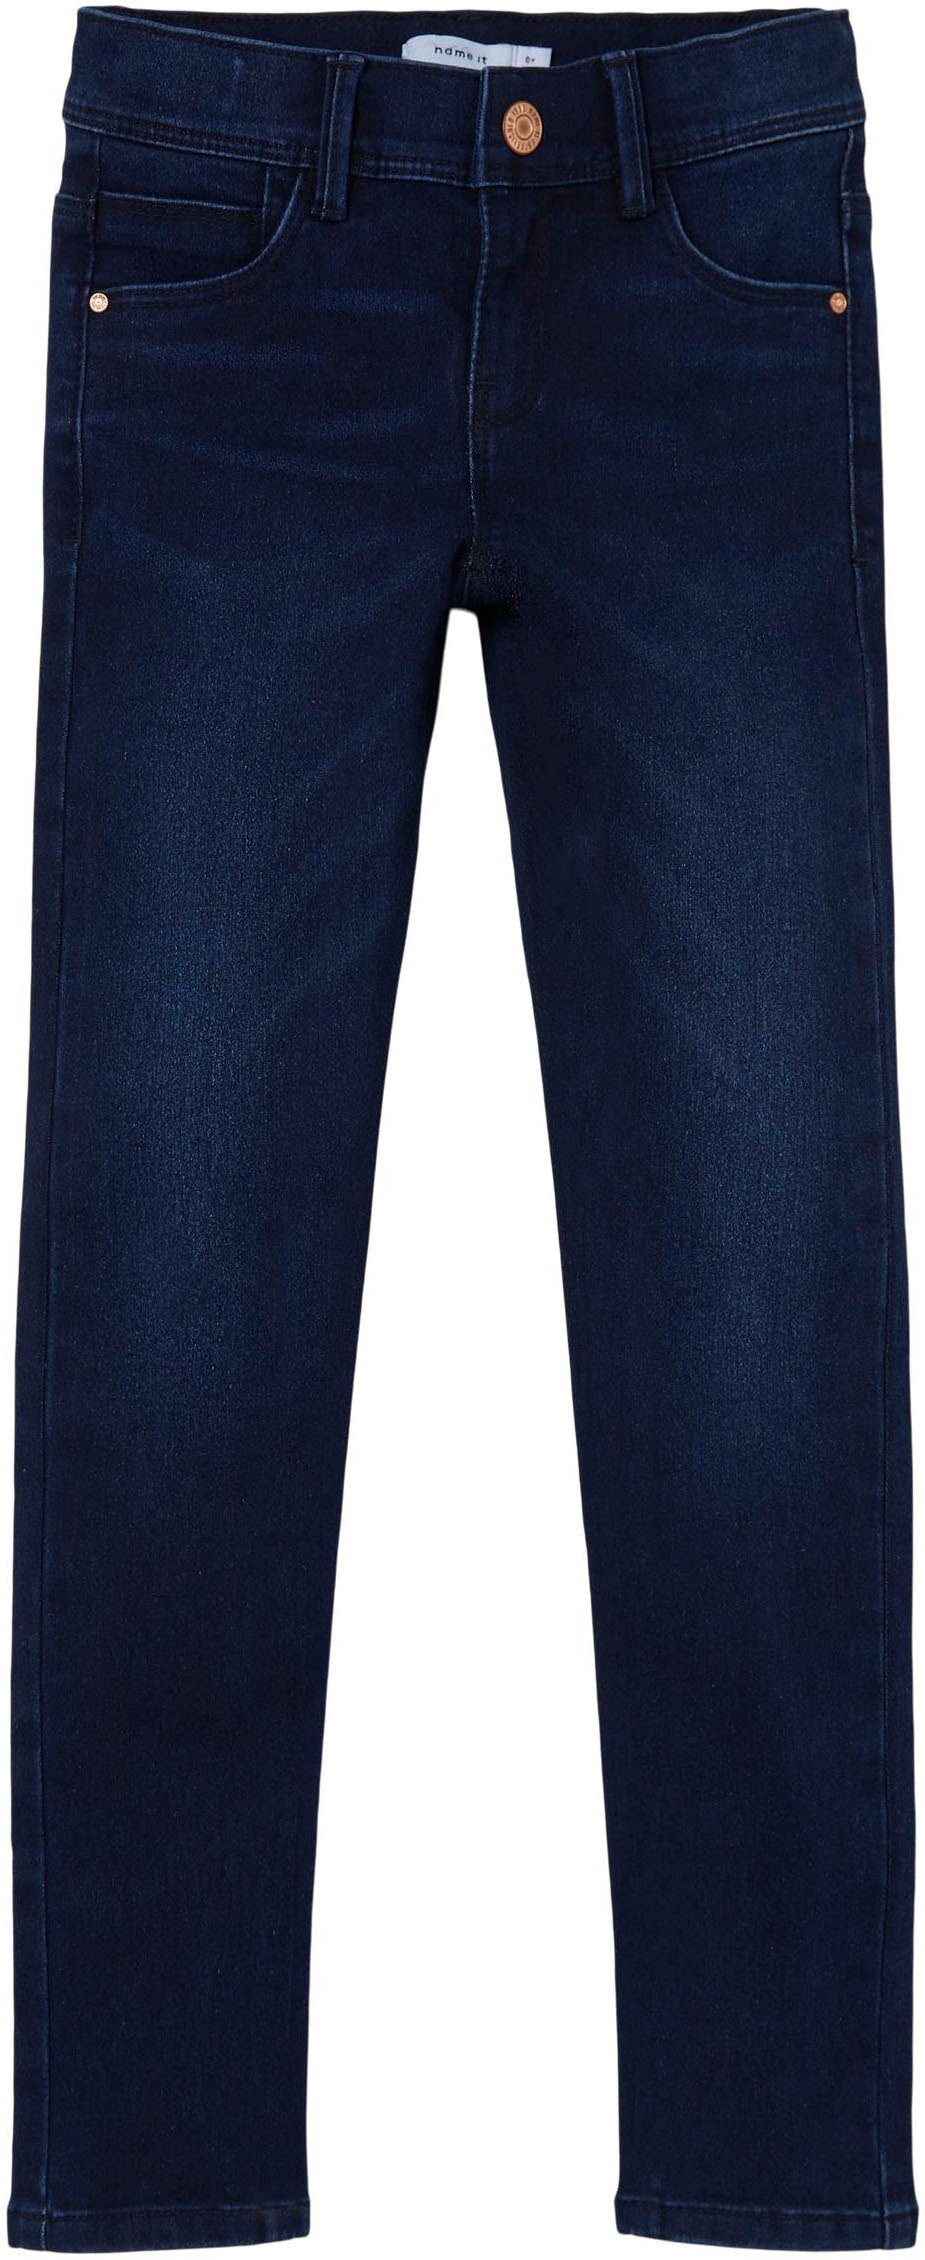 bequemem DNMTAX It aus dark blue denim Stretchdenim PANT Name NKFPOLLY Stretch-Jeans